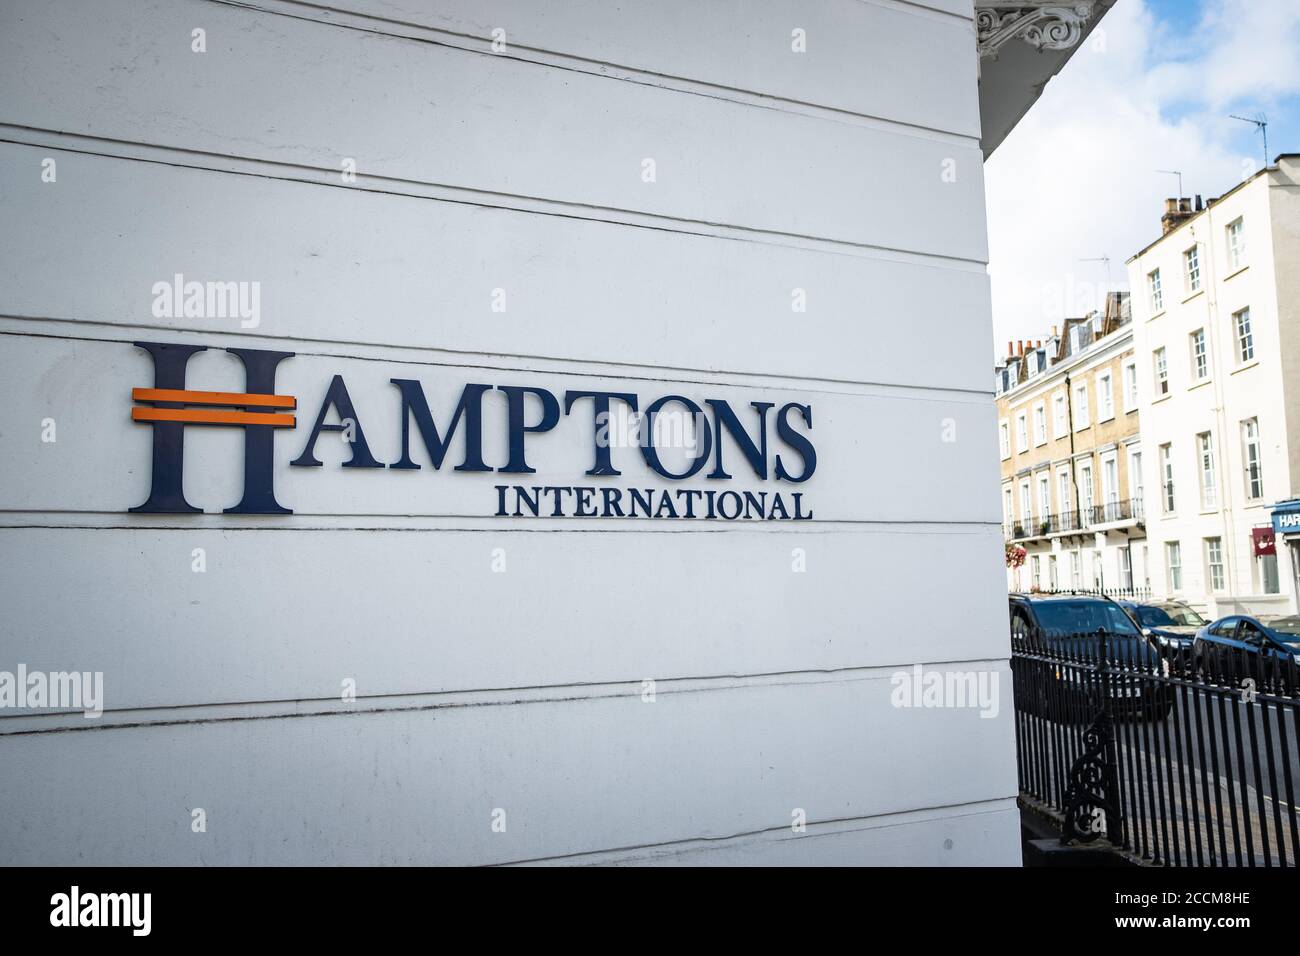 London- Hamptons International estate agents in Pimlico, SW1 Stock Photo